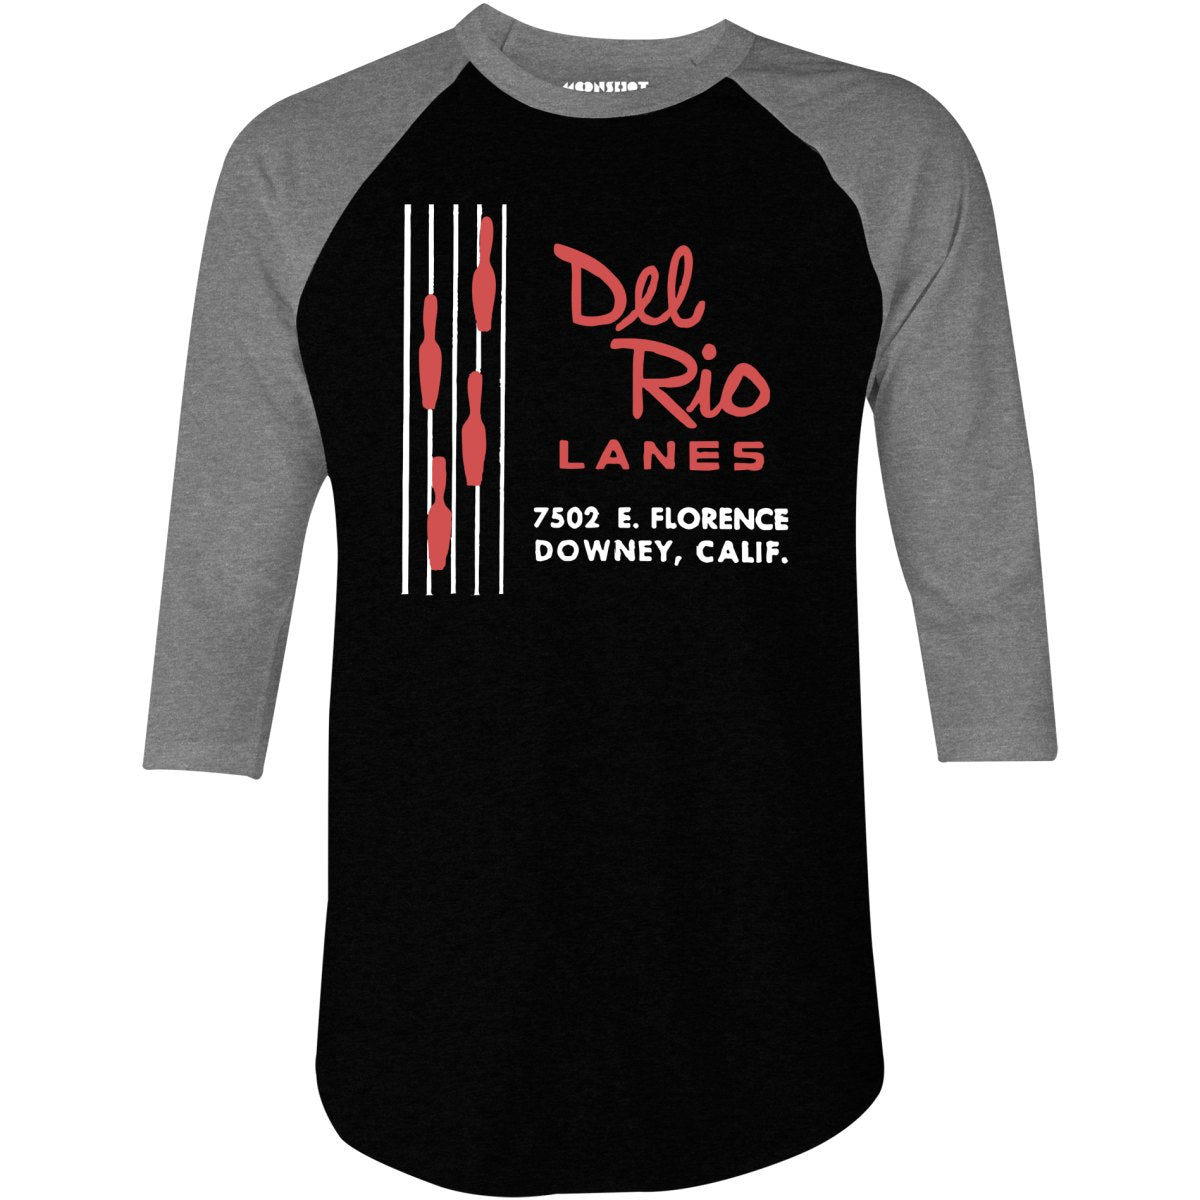 Del Rio Lanes - Downey, CA - Vintage Bowling Alley - 3/4 Sleeve Raglan T-Shirt